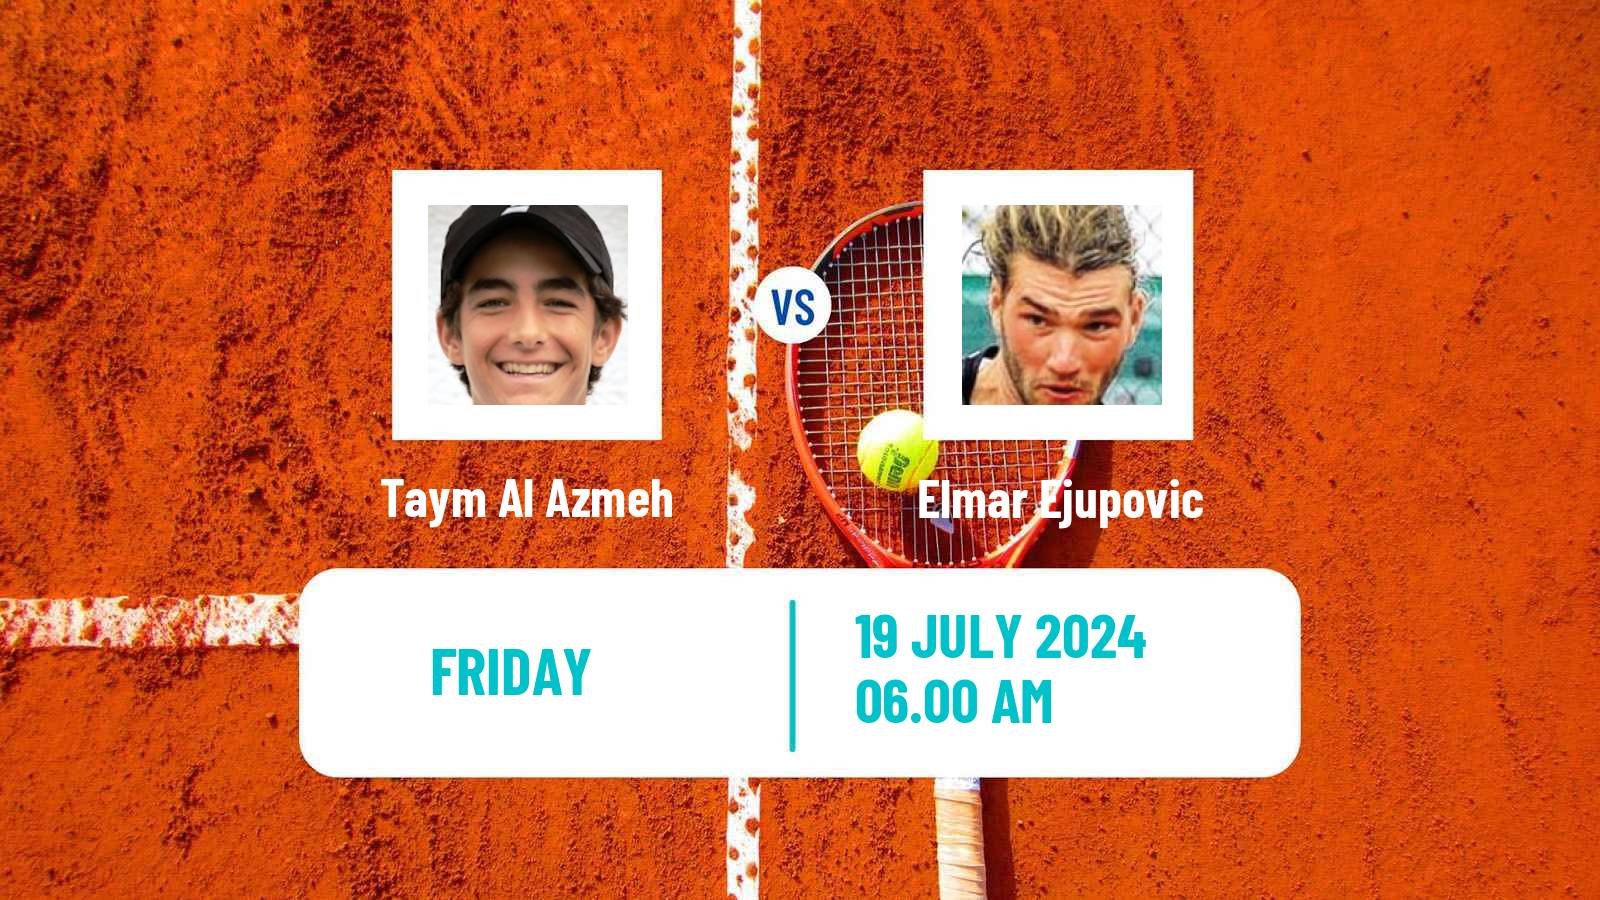 Tennis ITF M15 Uslar Men Taym Al Azmeh - Elmar Ejupovic